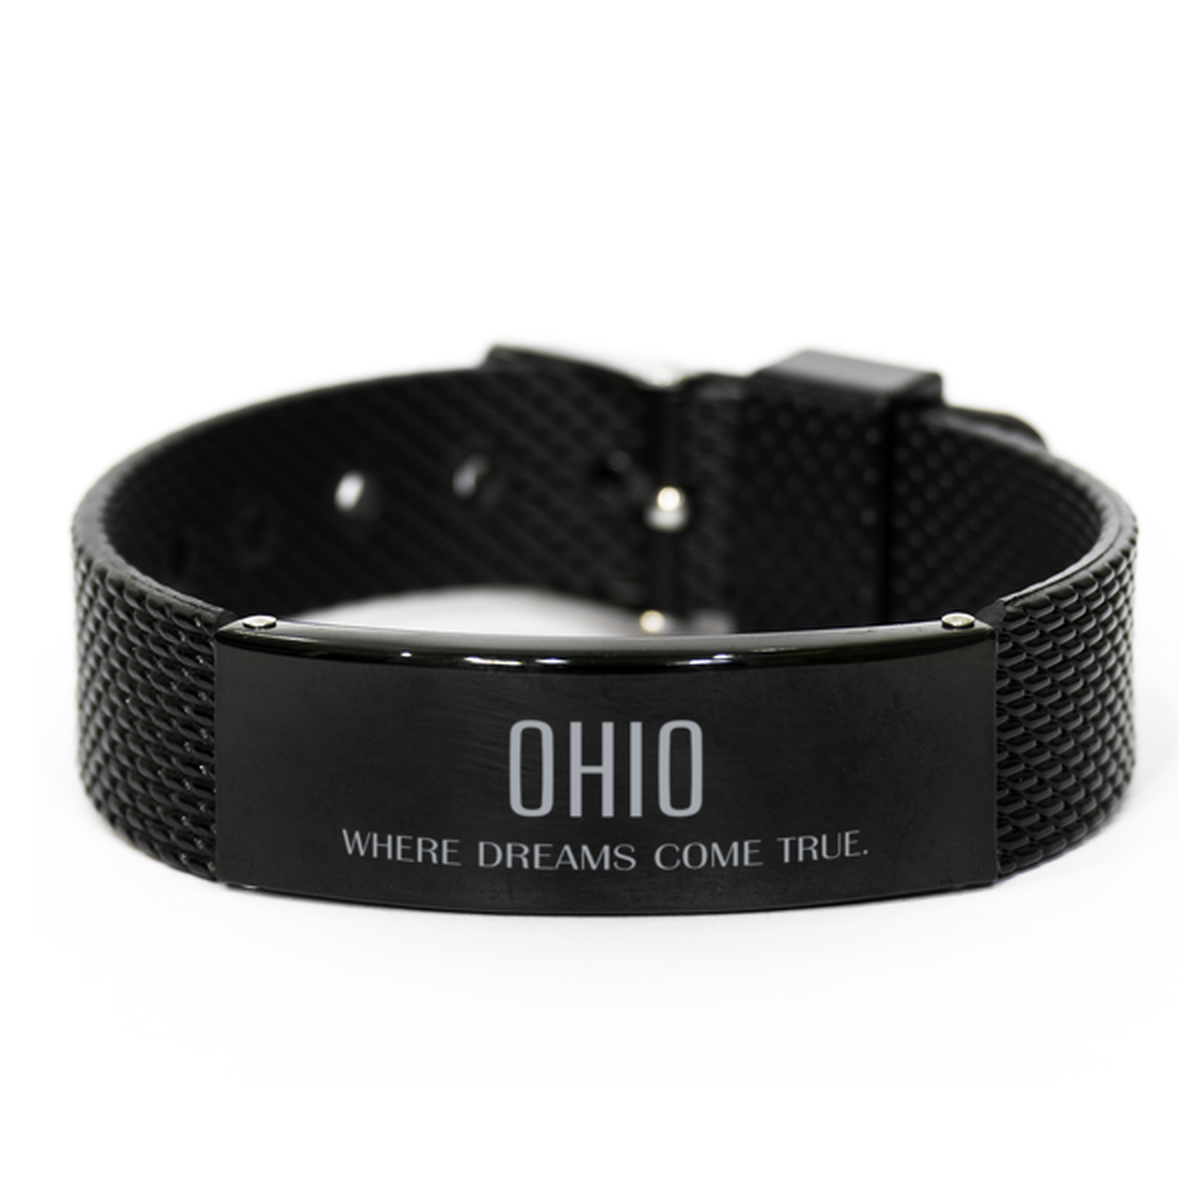 Love Ohio State Black Shark Mesh Bracelet, Ohio Where dreams come true, Birthday Inspirational Gifts For Ohio Men, Women, Friends